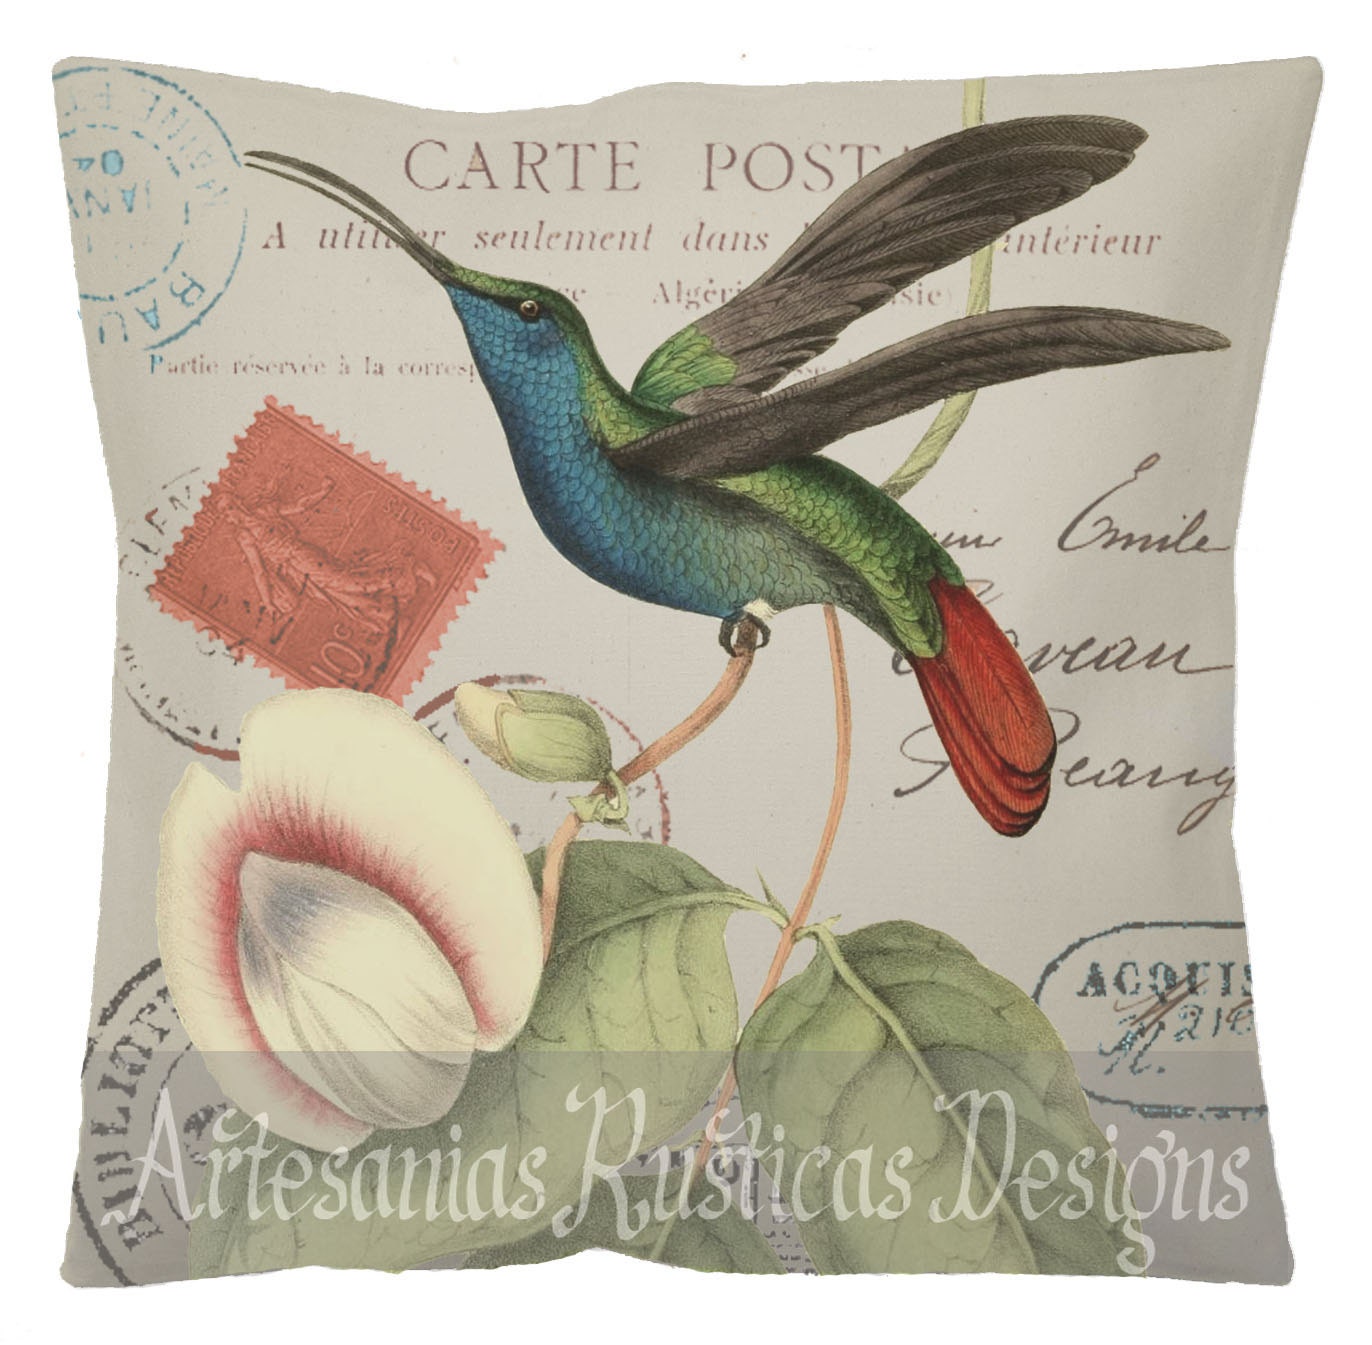 Retro-Chic Hummingbird-Design Throw Pillow Cover